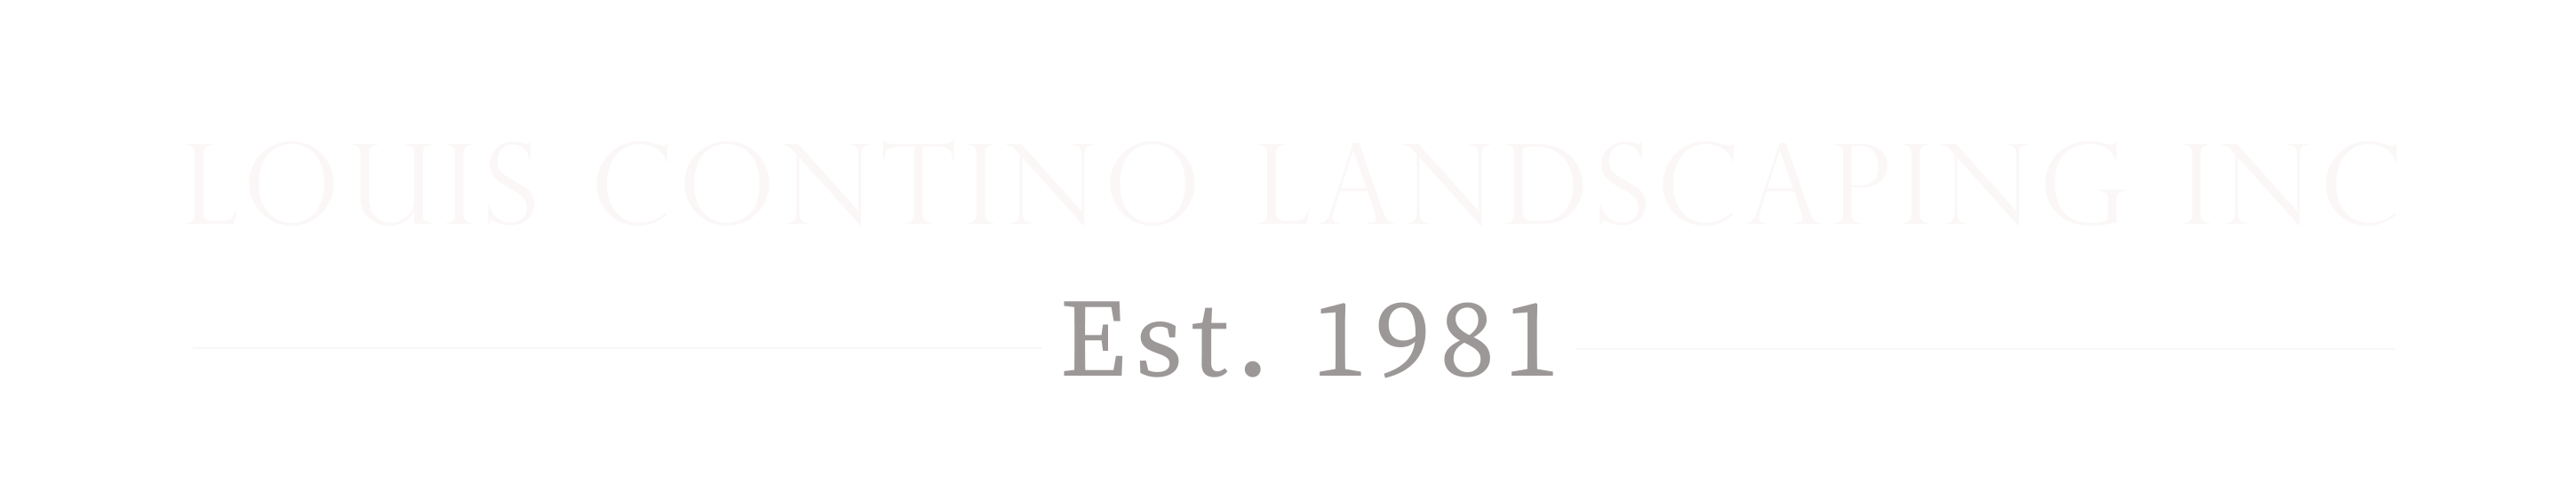 Louis Contino Landscaping Logo three